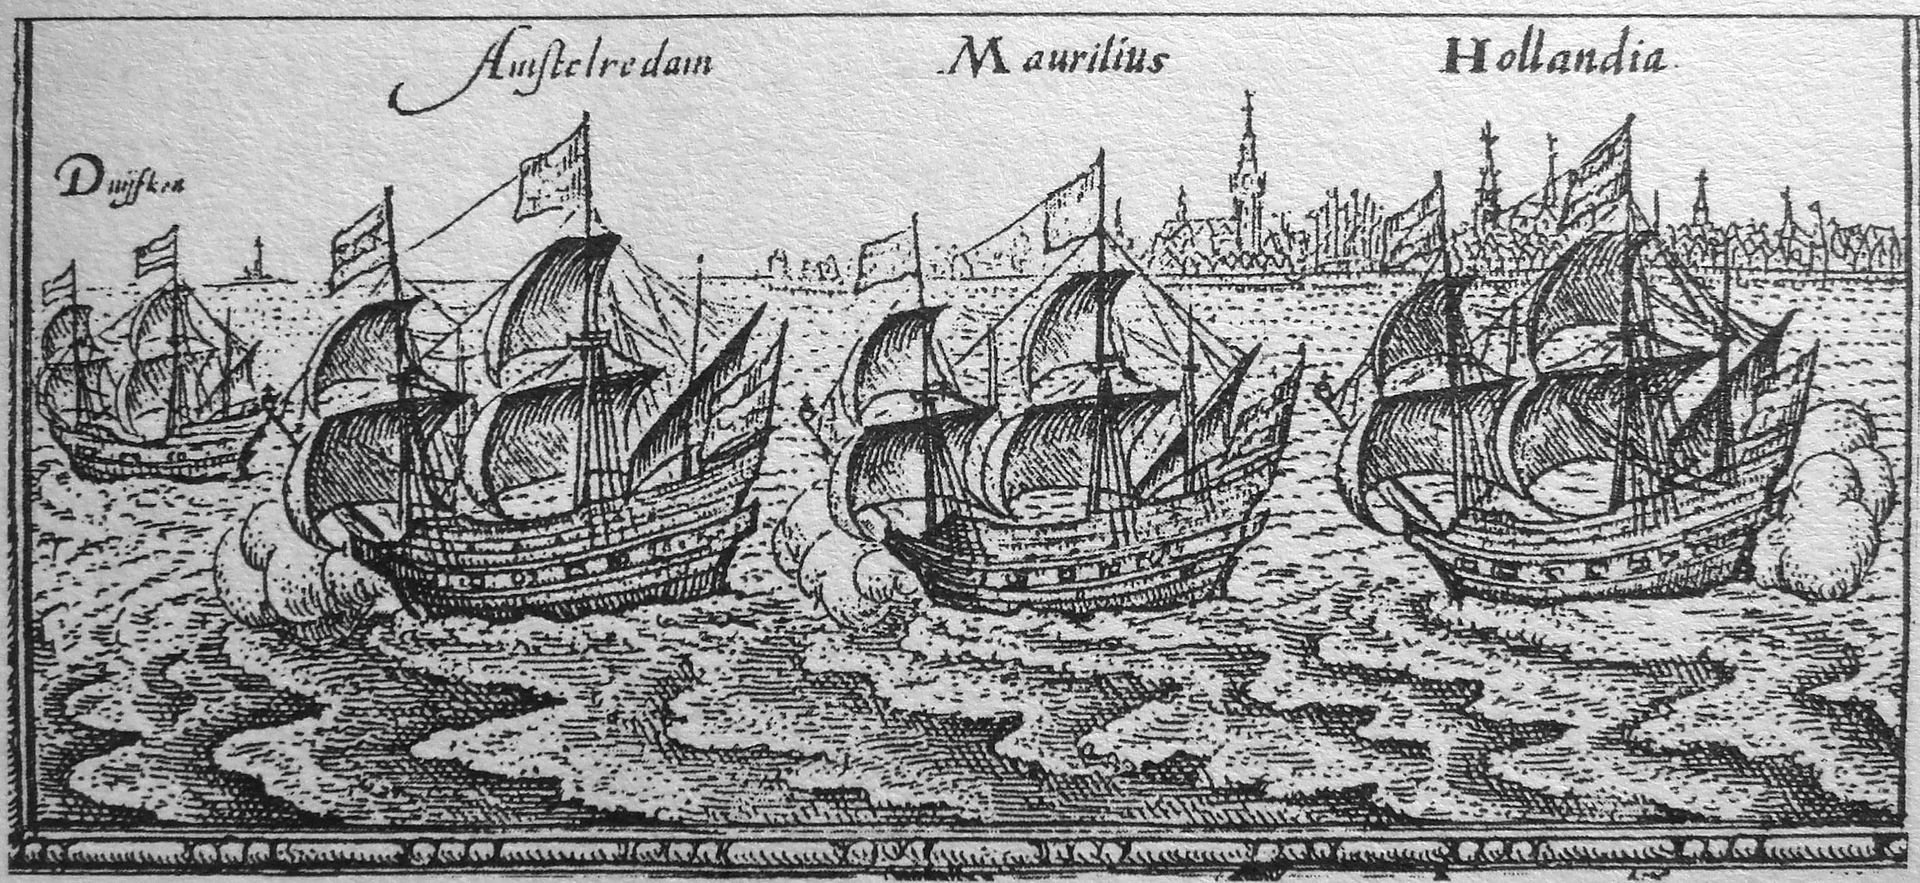 The "Bali fleet" of Cornelis de Houtman, leaving Amsterdam.